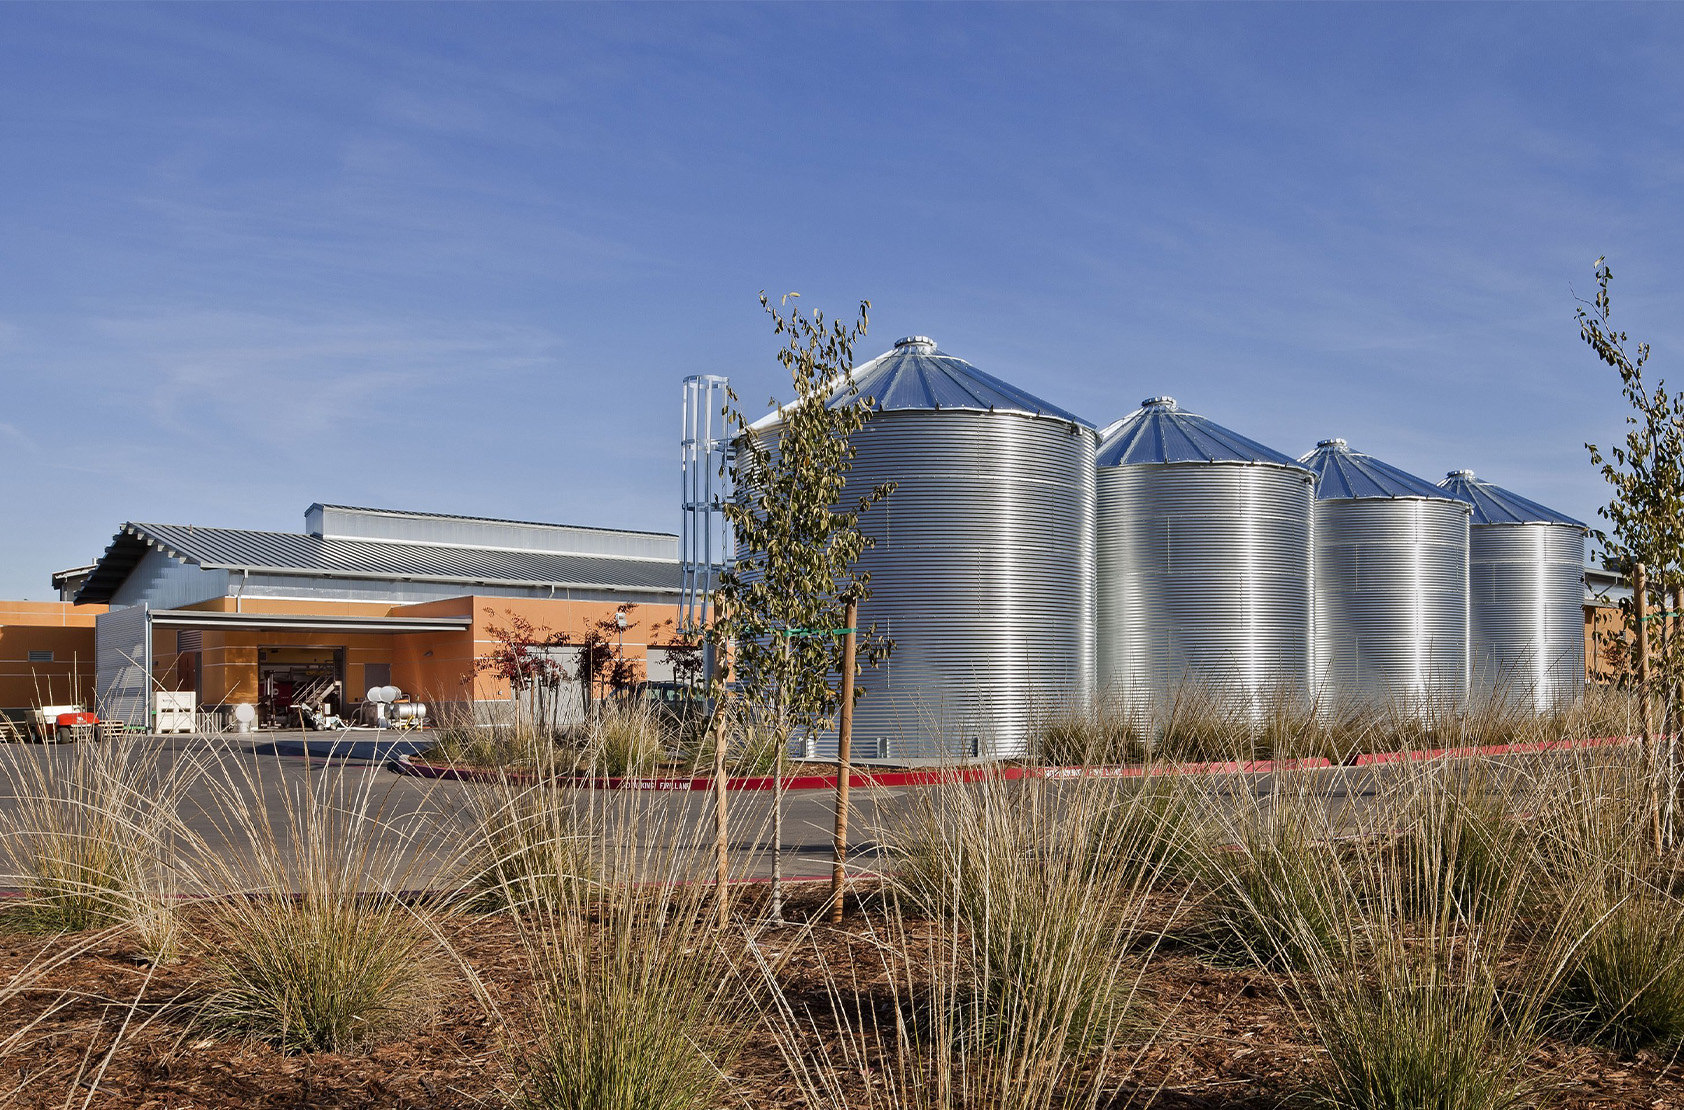 University of California, Davis - Winery, Brewery, and Food Science Laboratory